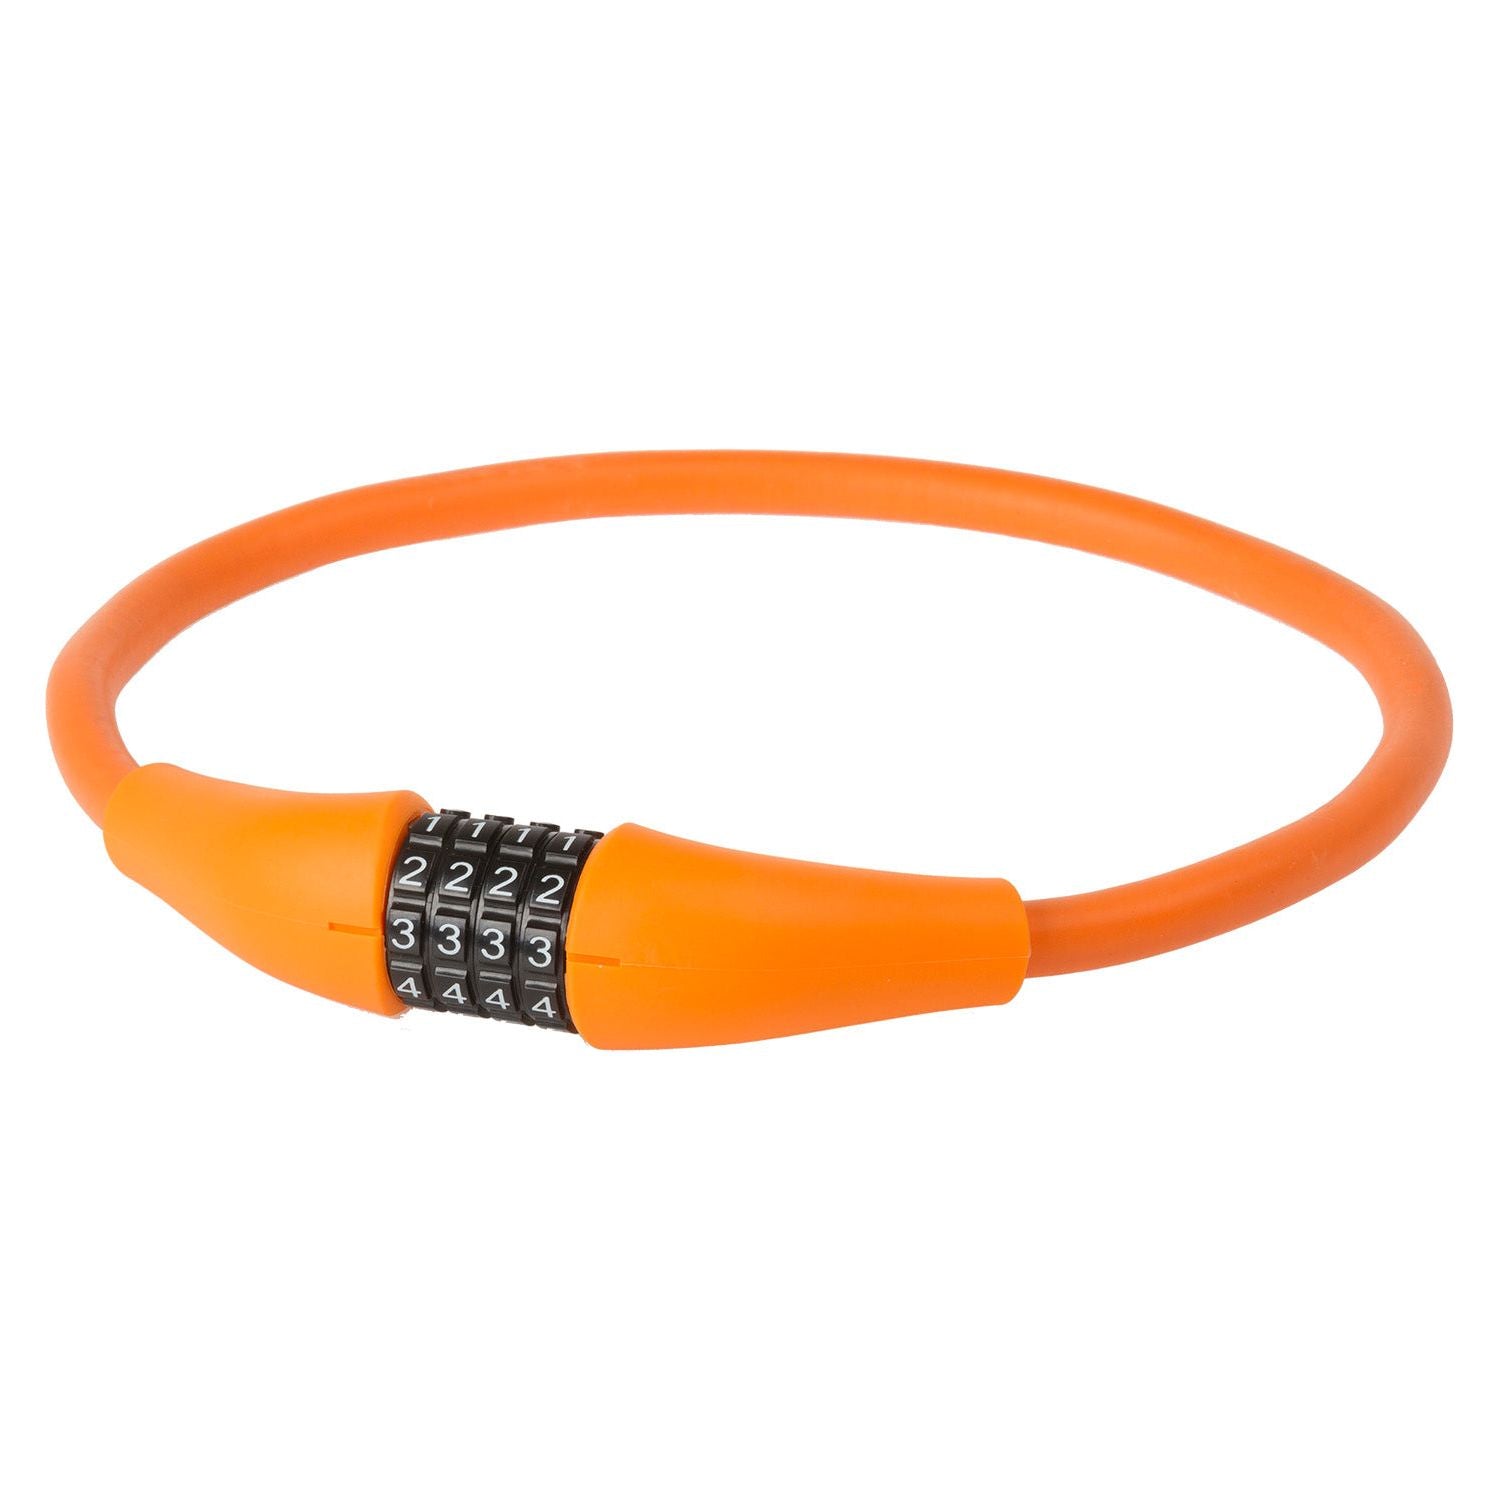 Cable combination lock M-Wave Silicon 900 x 12mm - orange